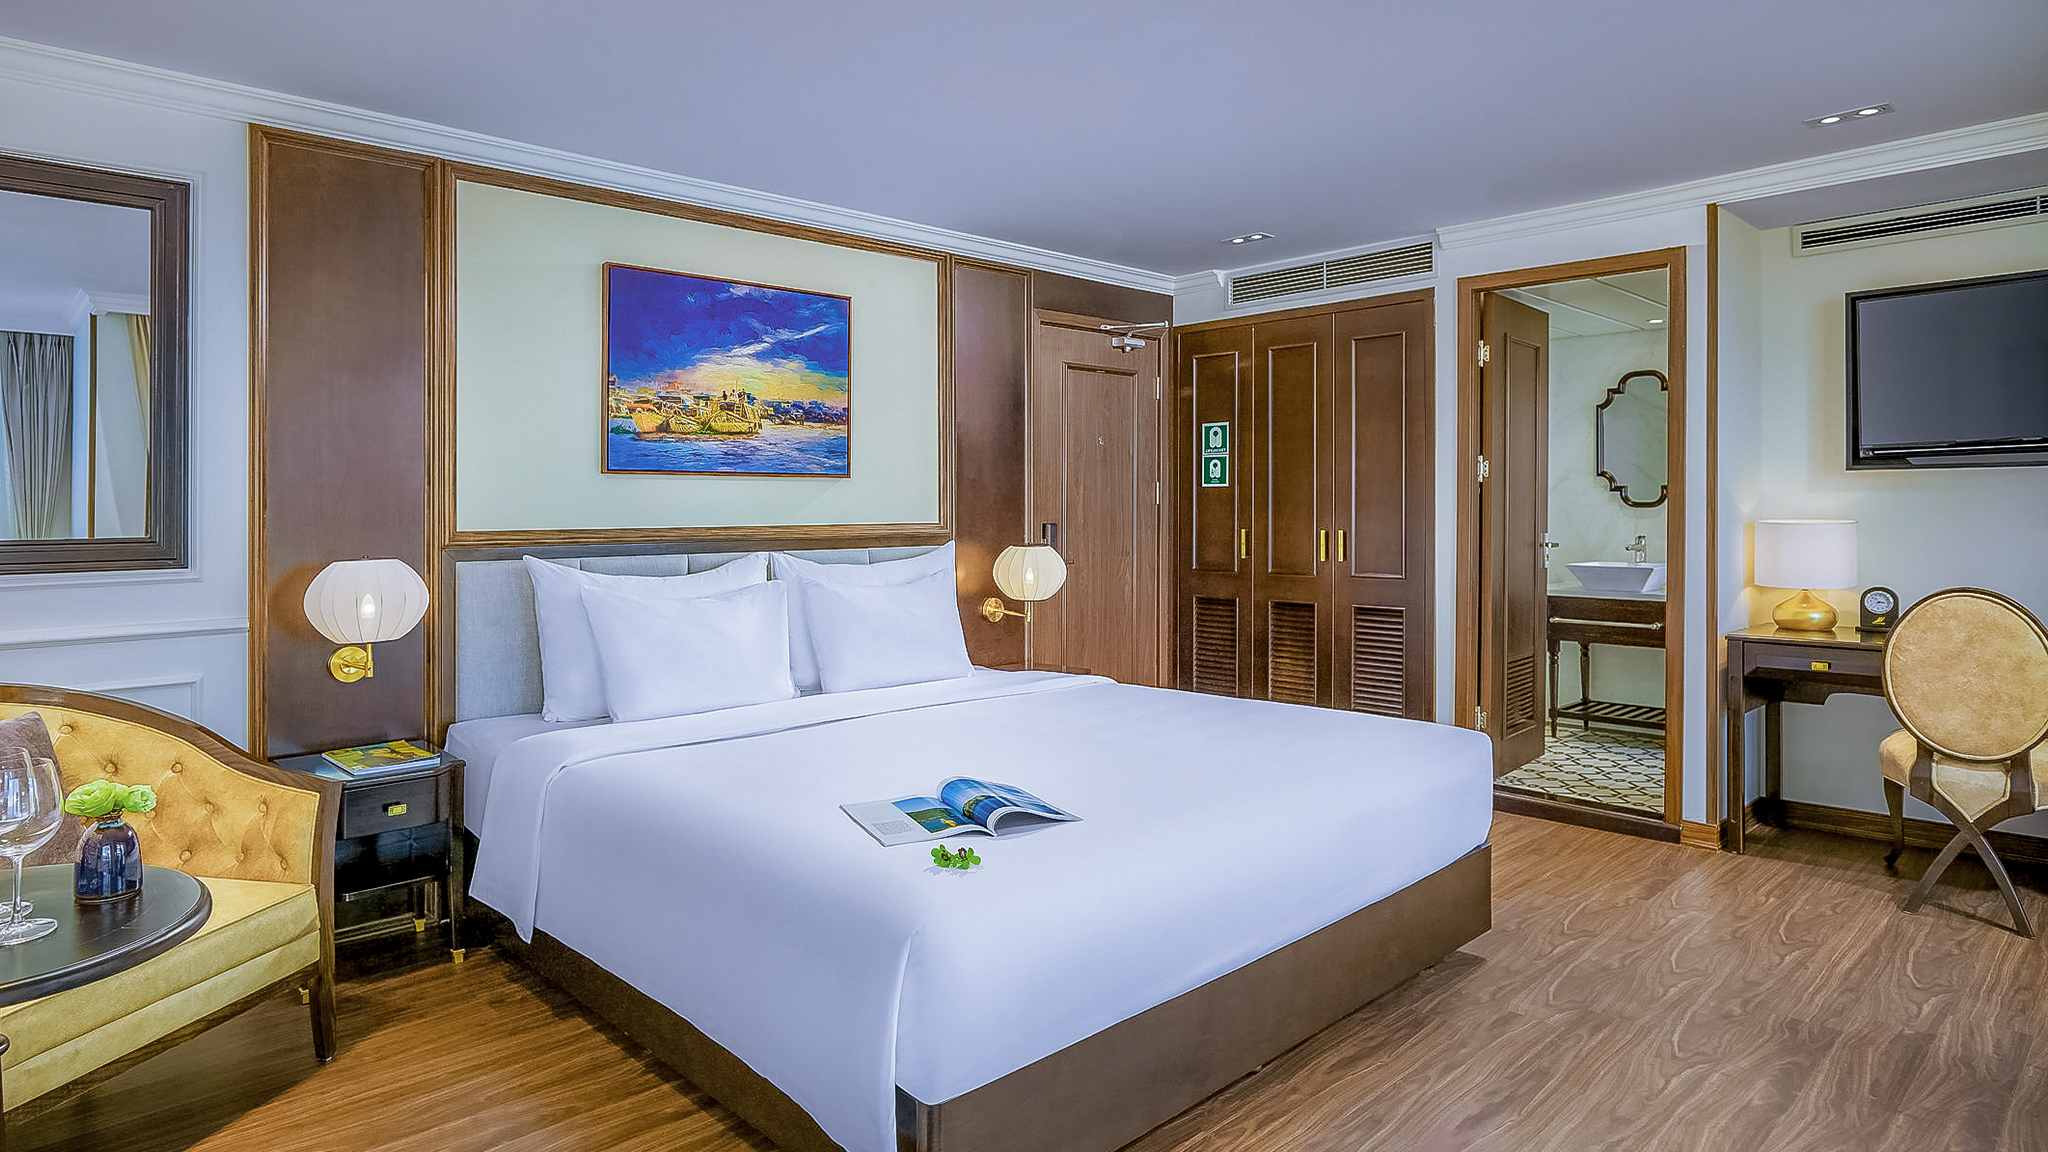 Comfy luxury overnight accommodation